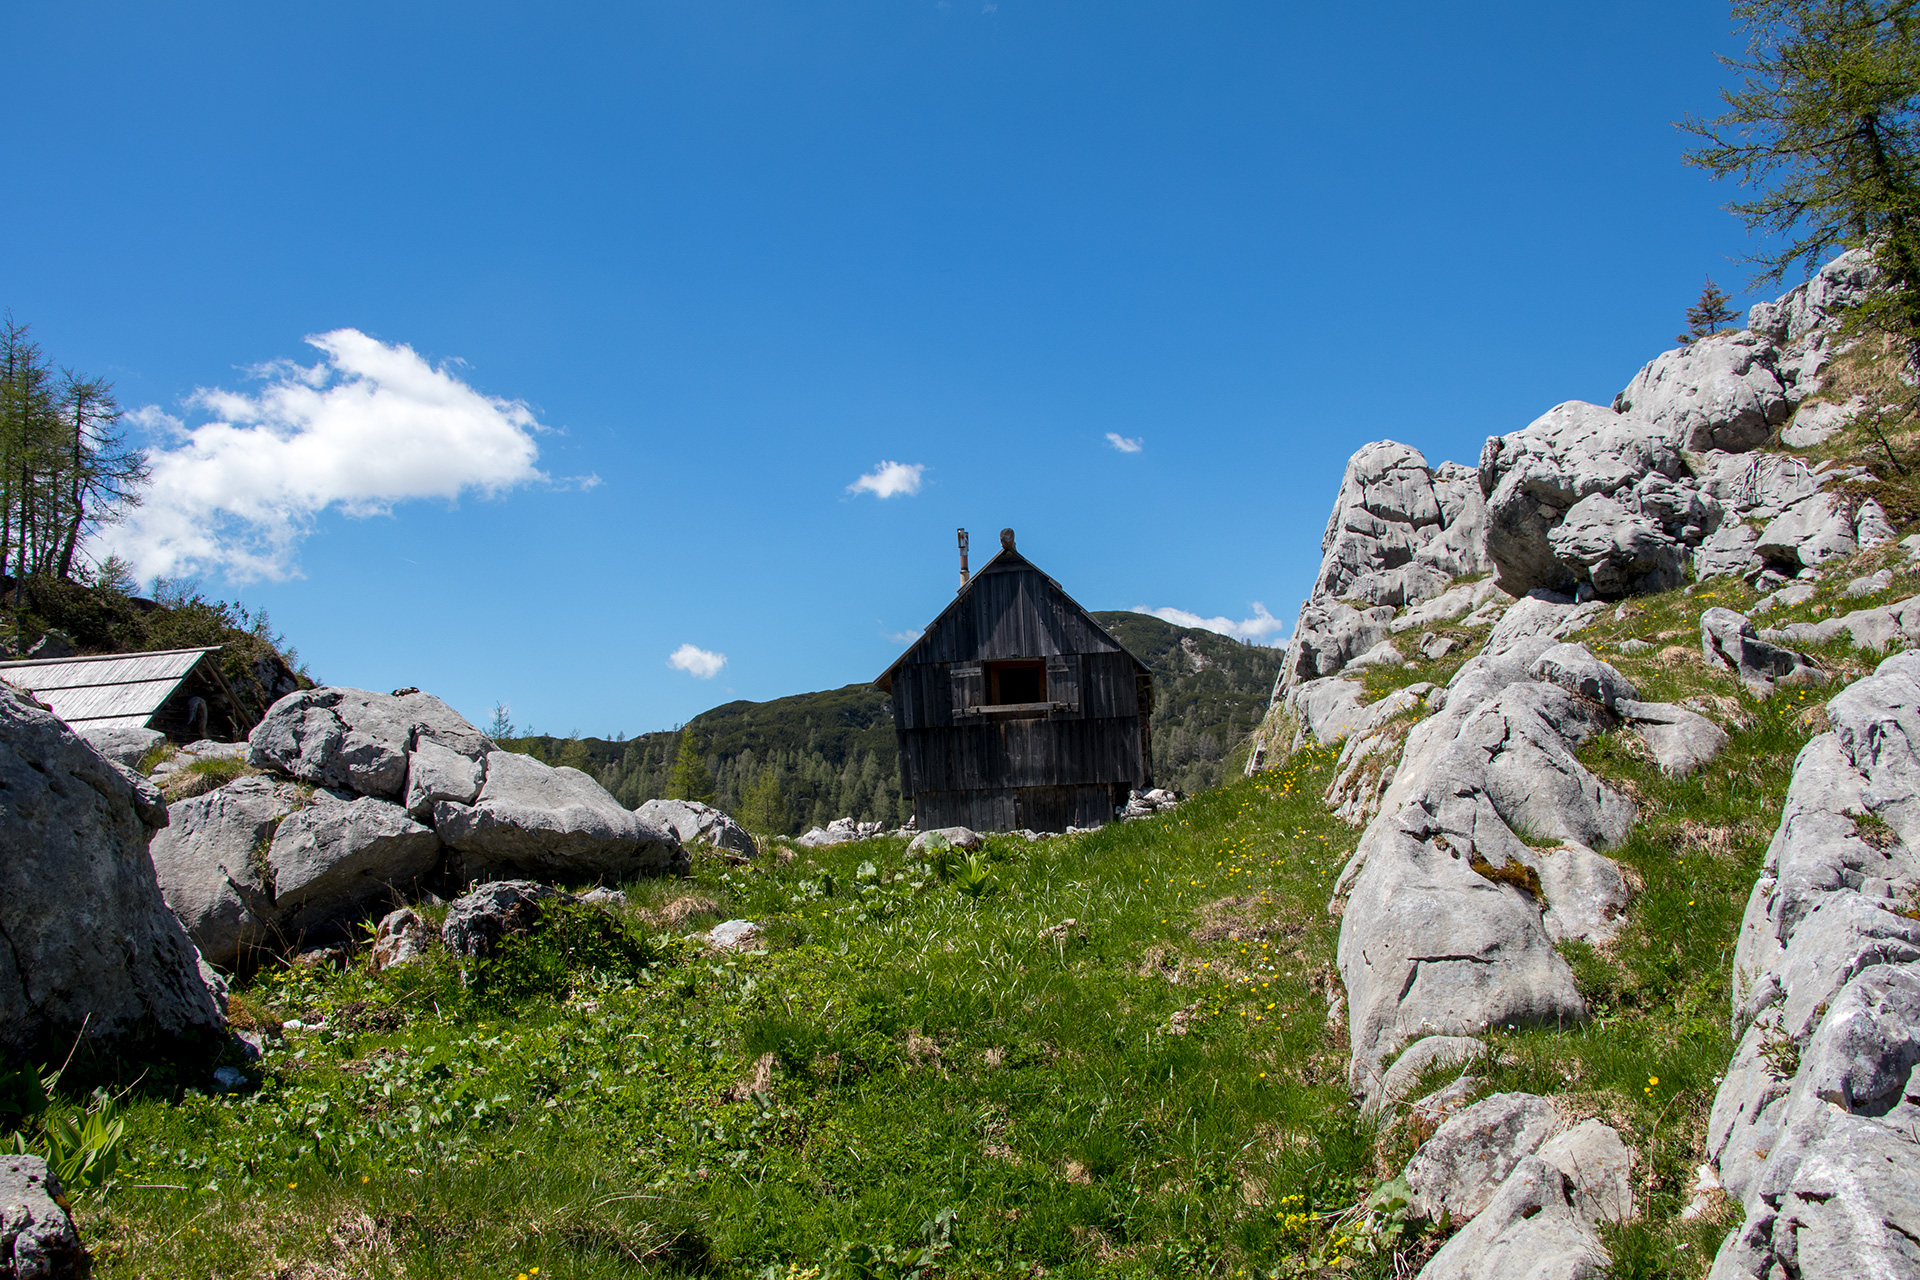 Shepherds’ huts at the Dedno Polje mountain pasture